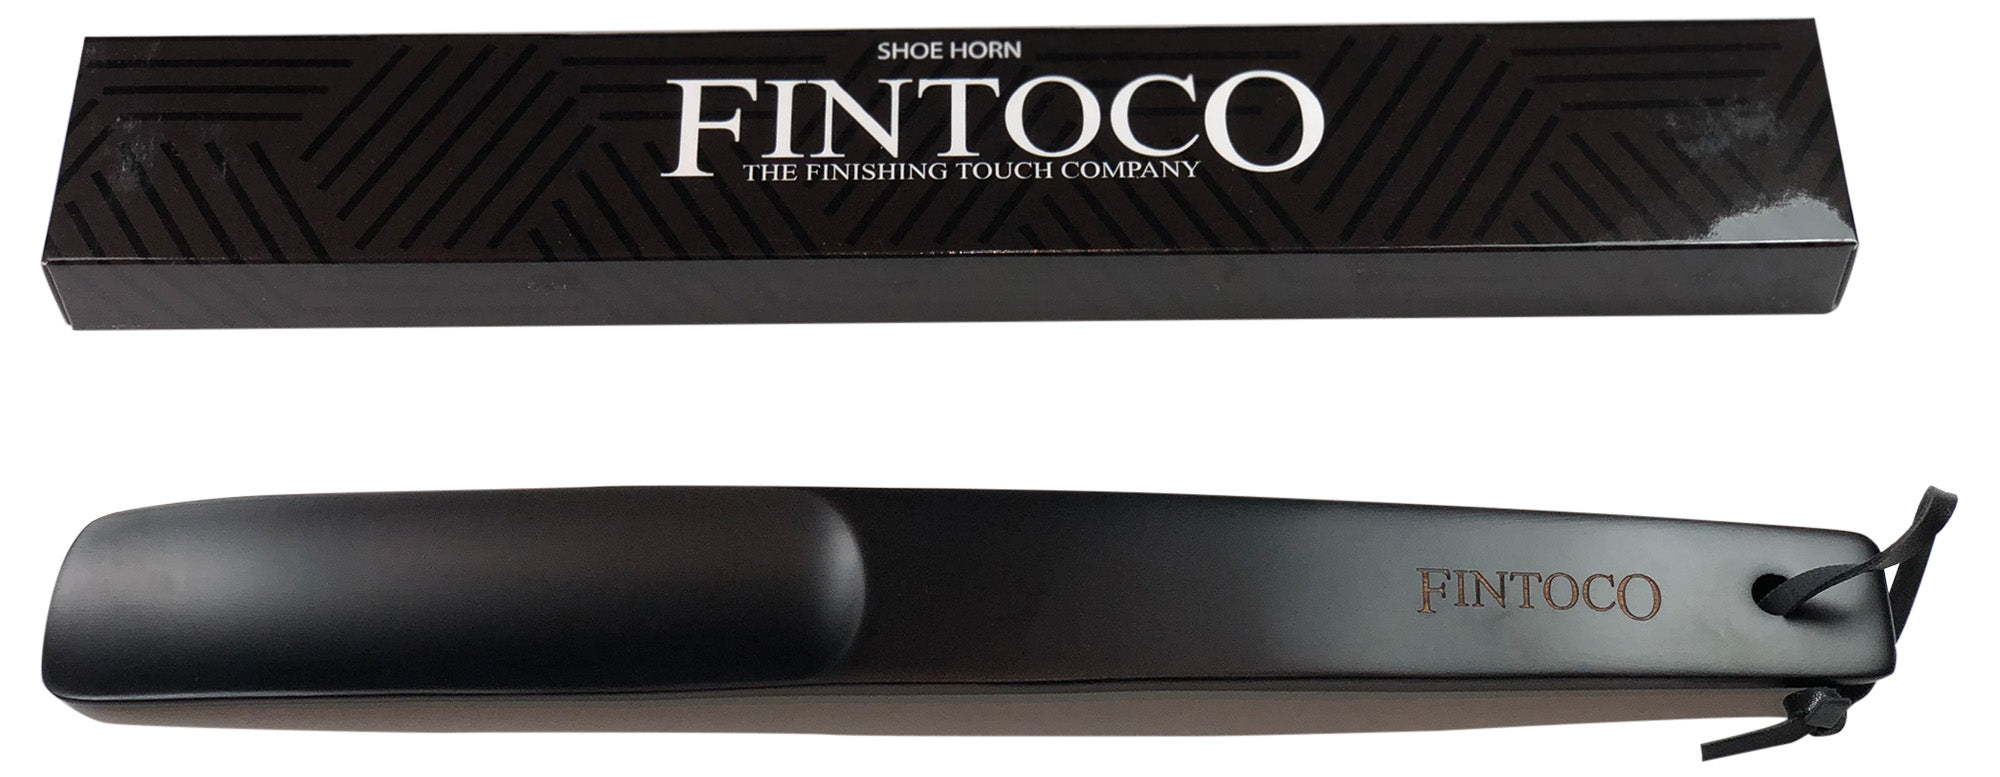 Fintoco Premium Shoe Horn